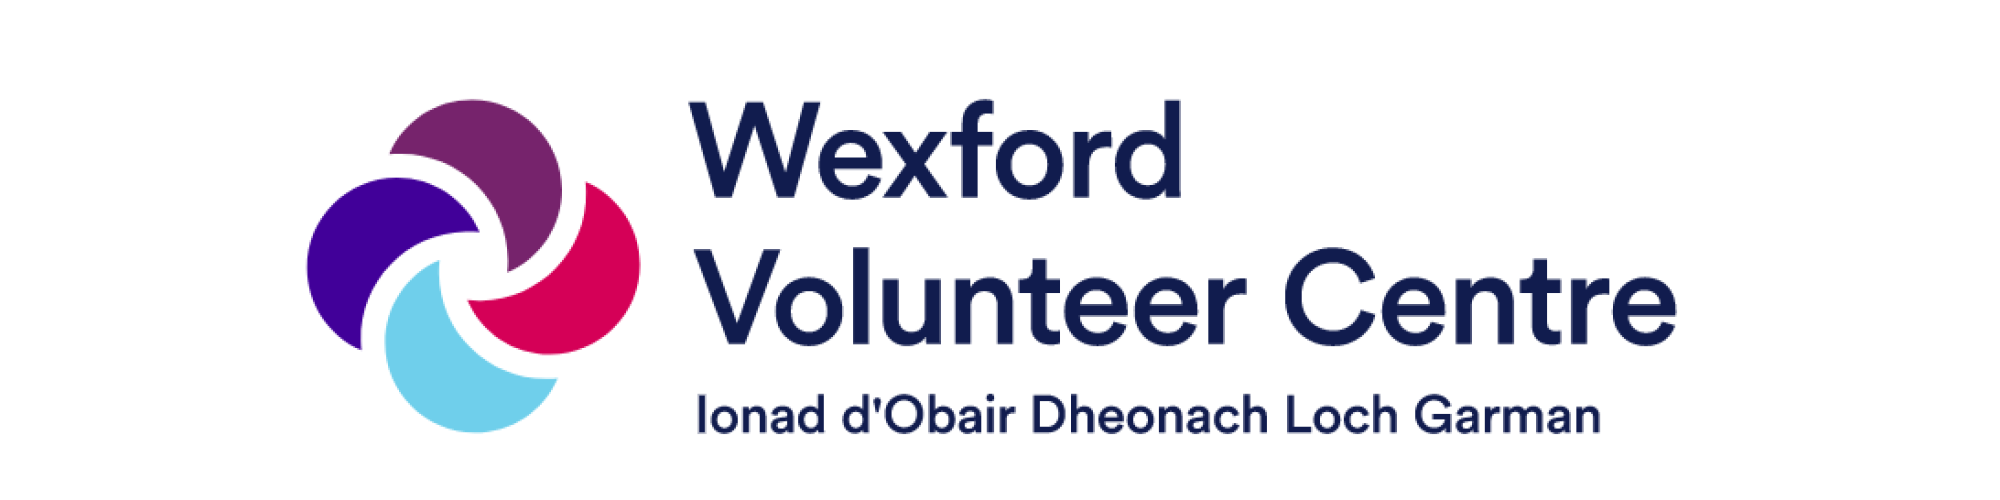 Wexford Volunteer Centre